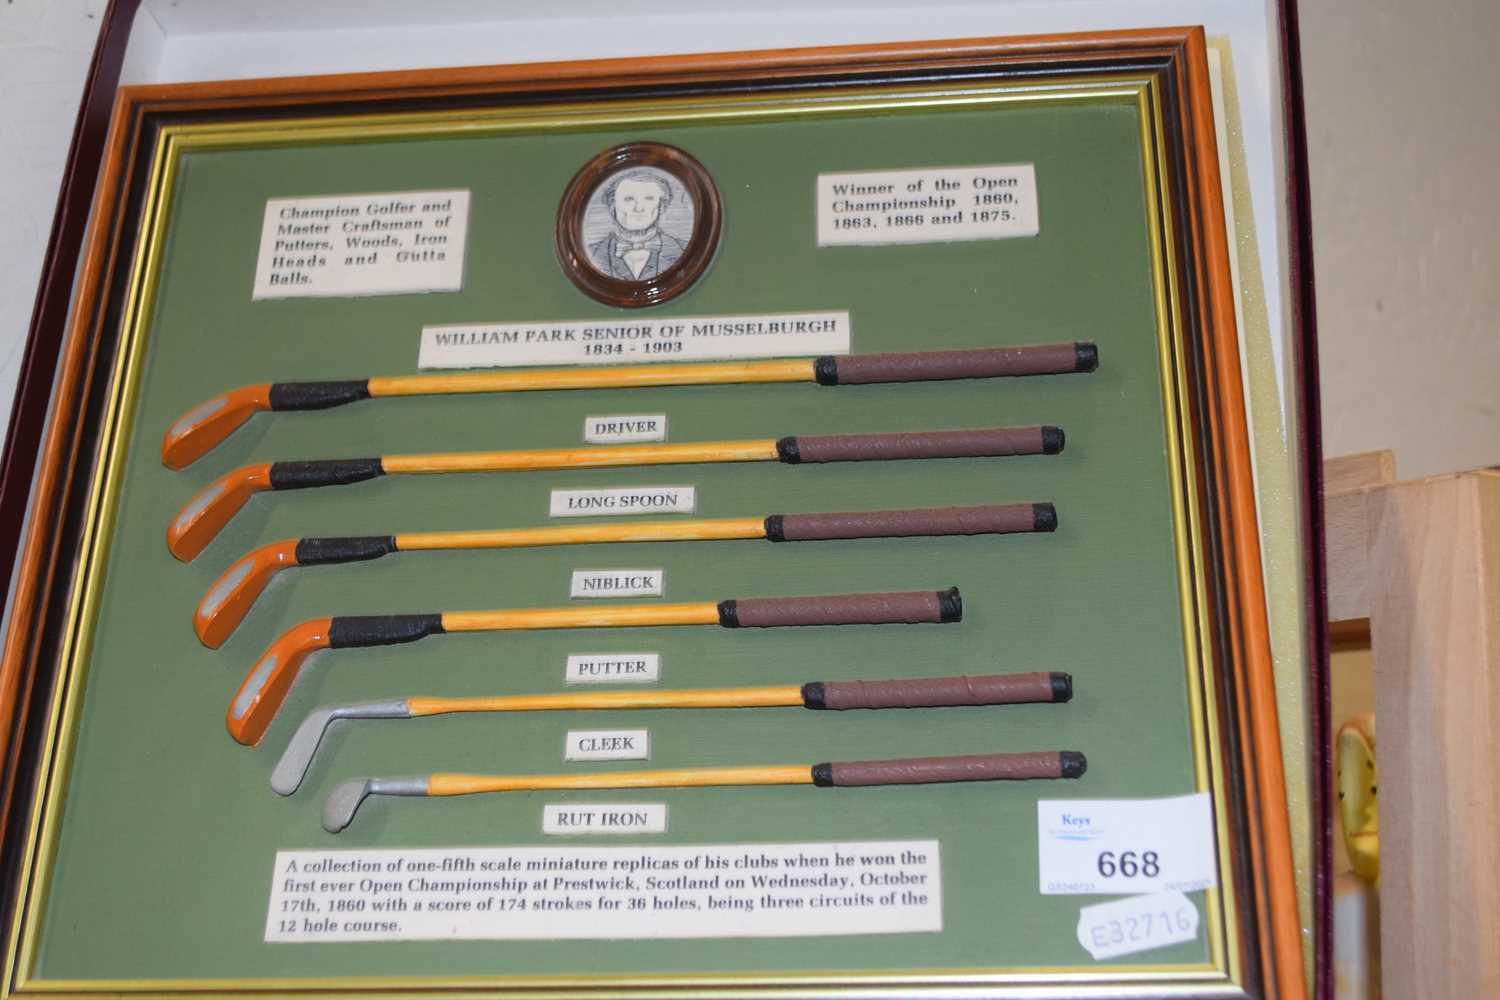 A framed display of miniature golf clubs